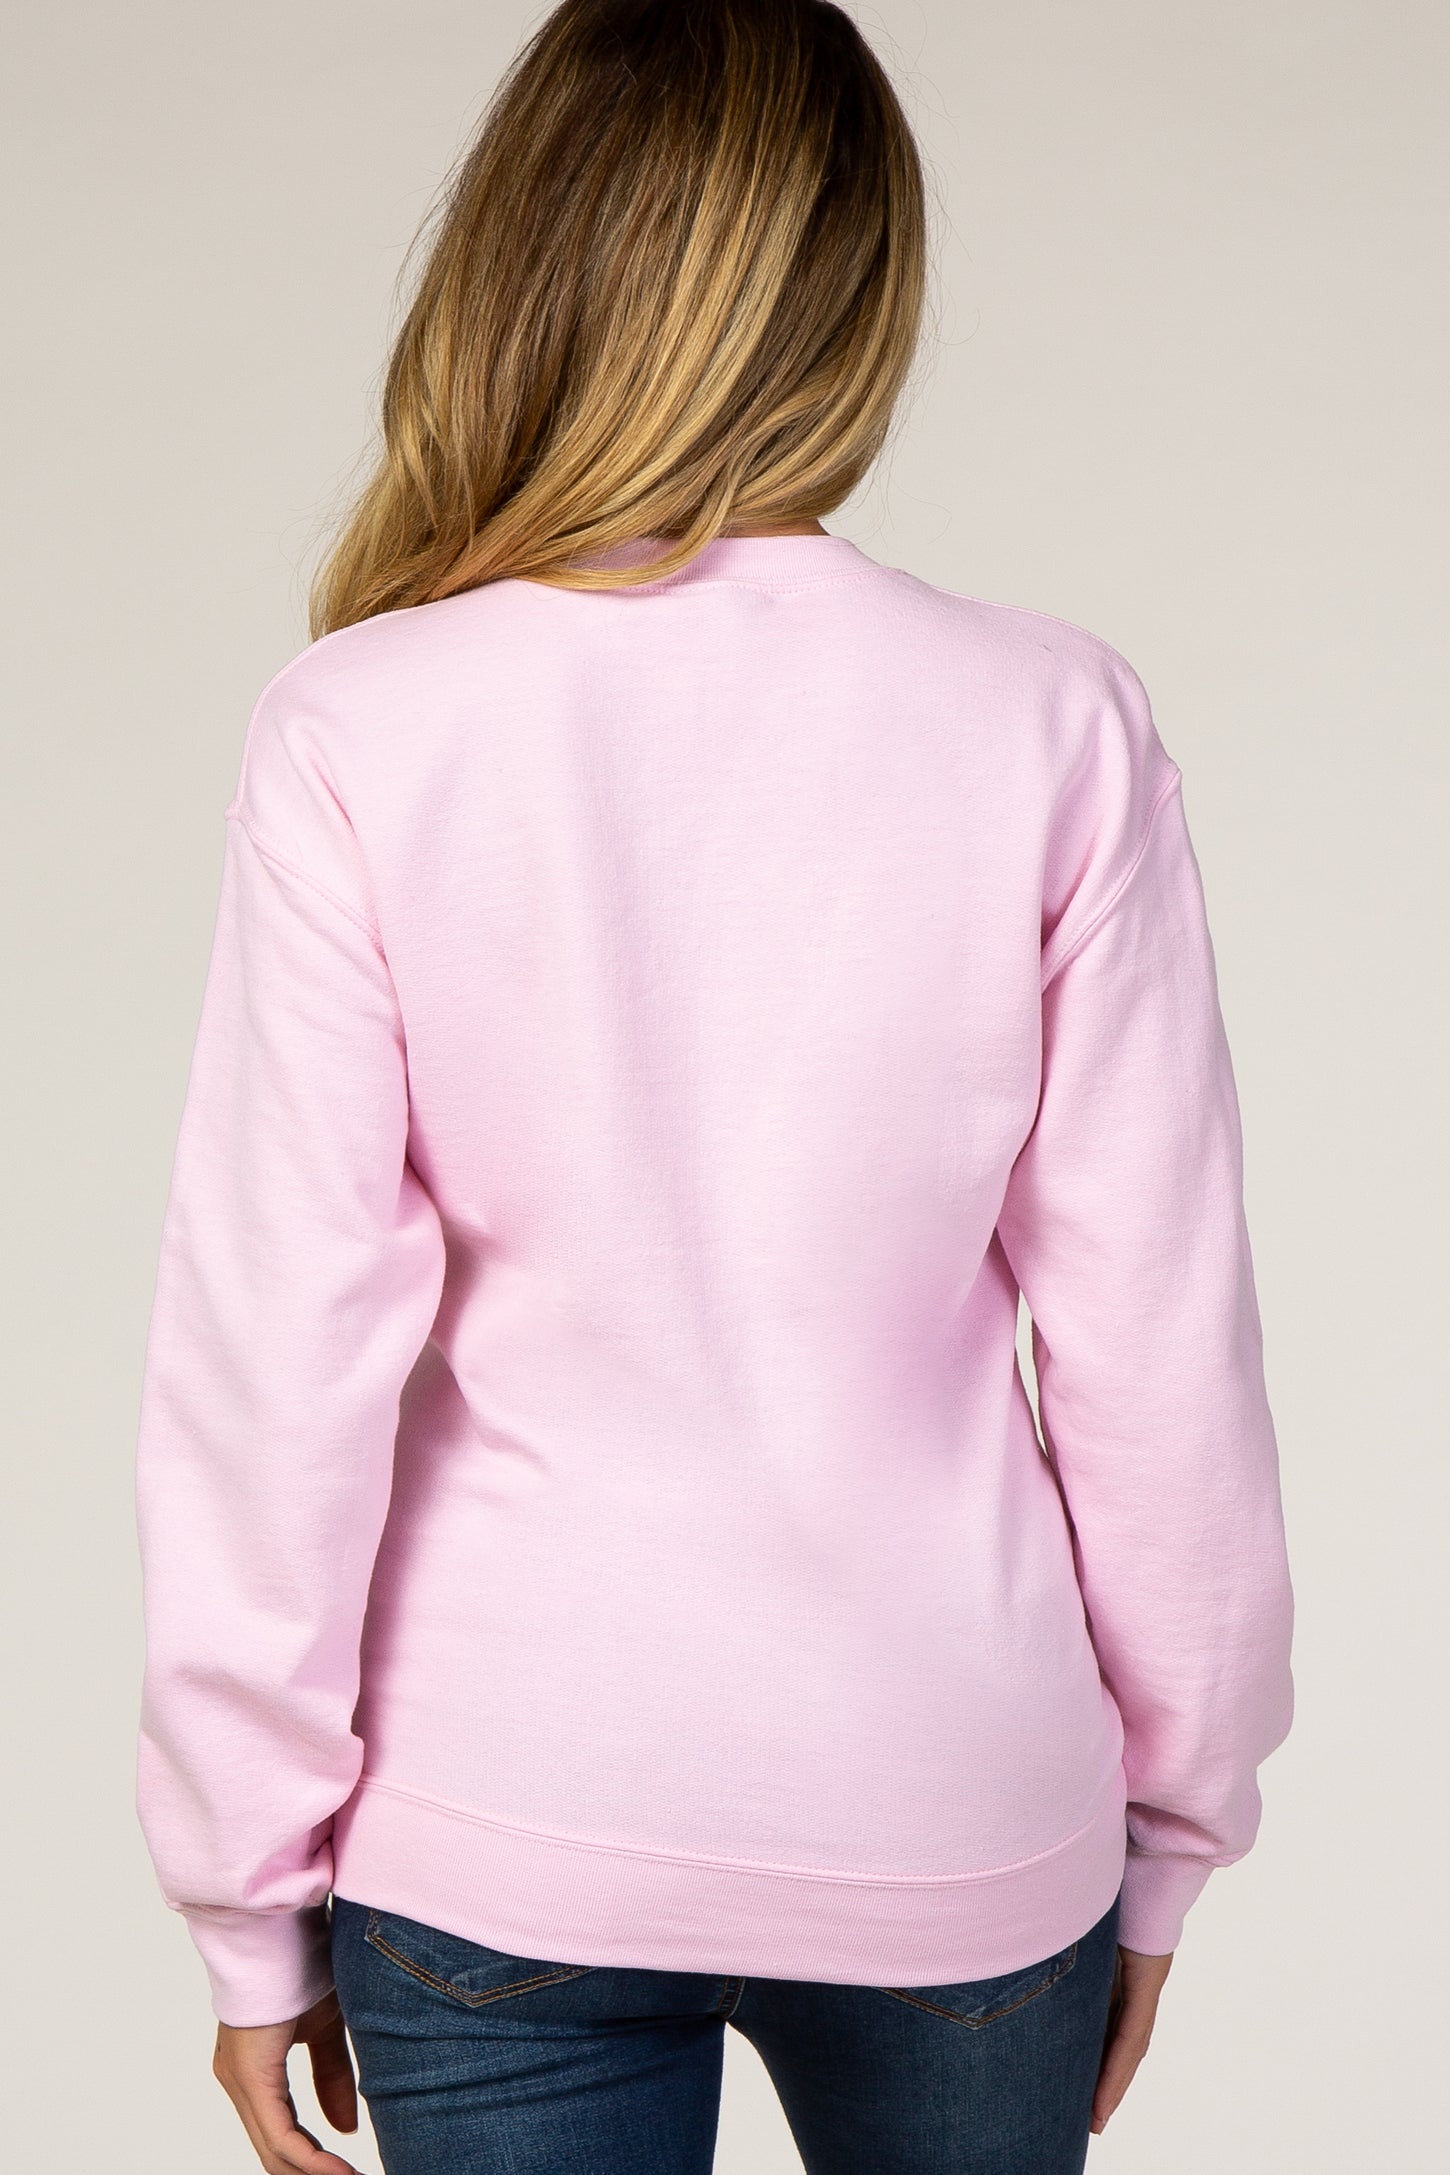 Pink Screen Print Babe Maternity Pullover Sweatshirt